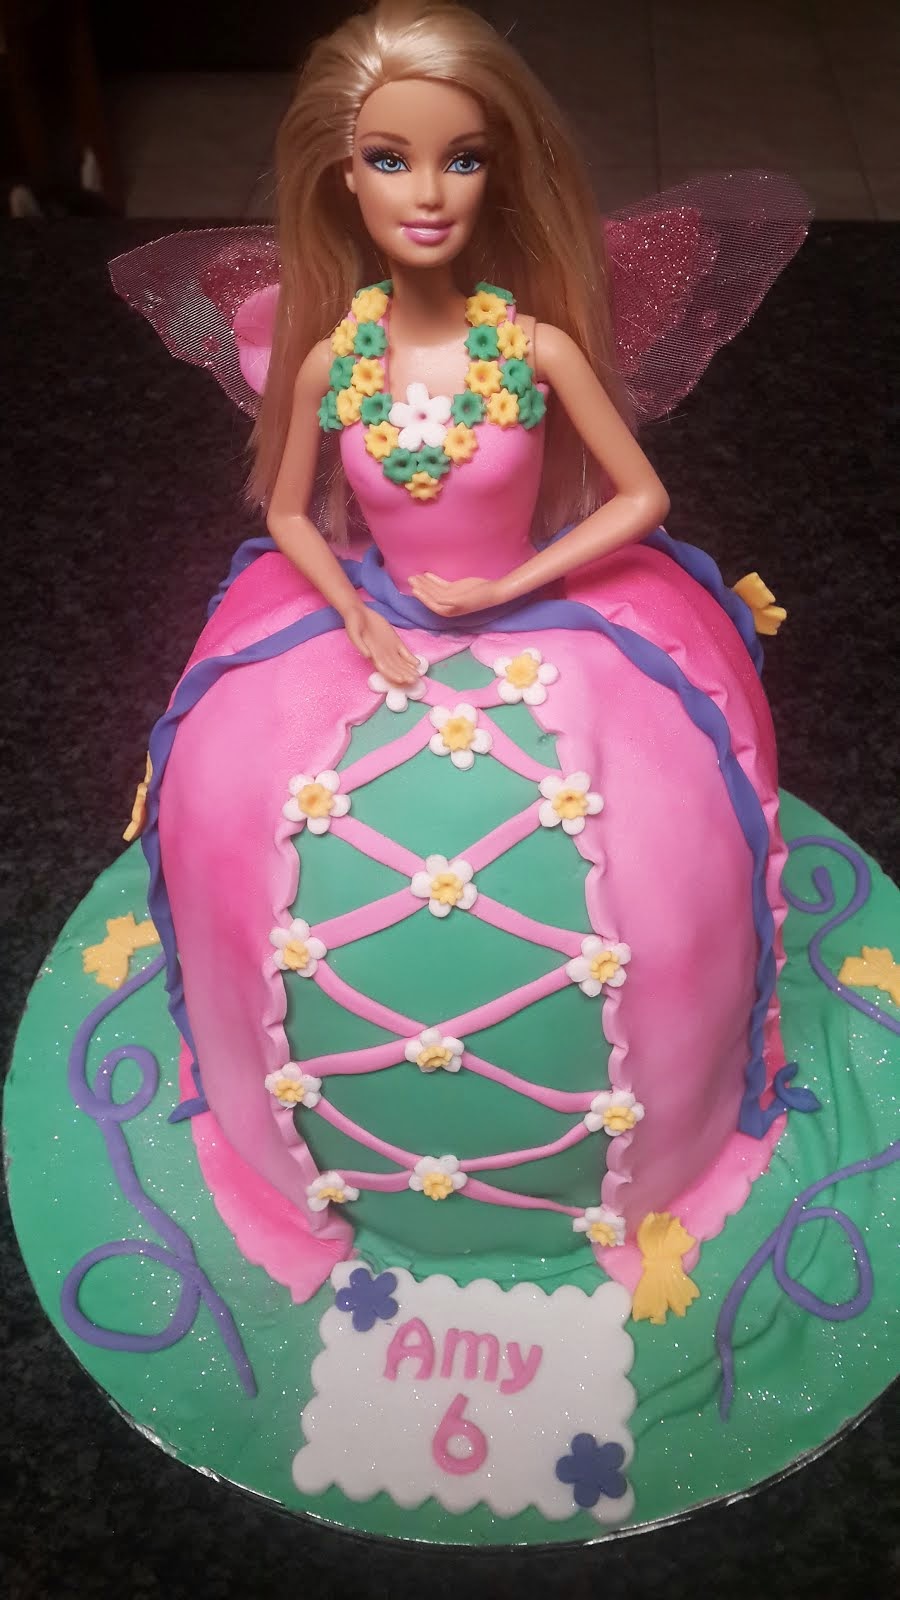 Barbie doll cake